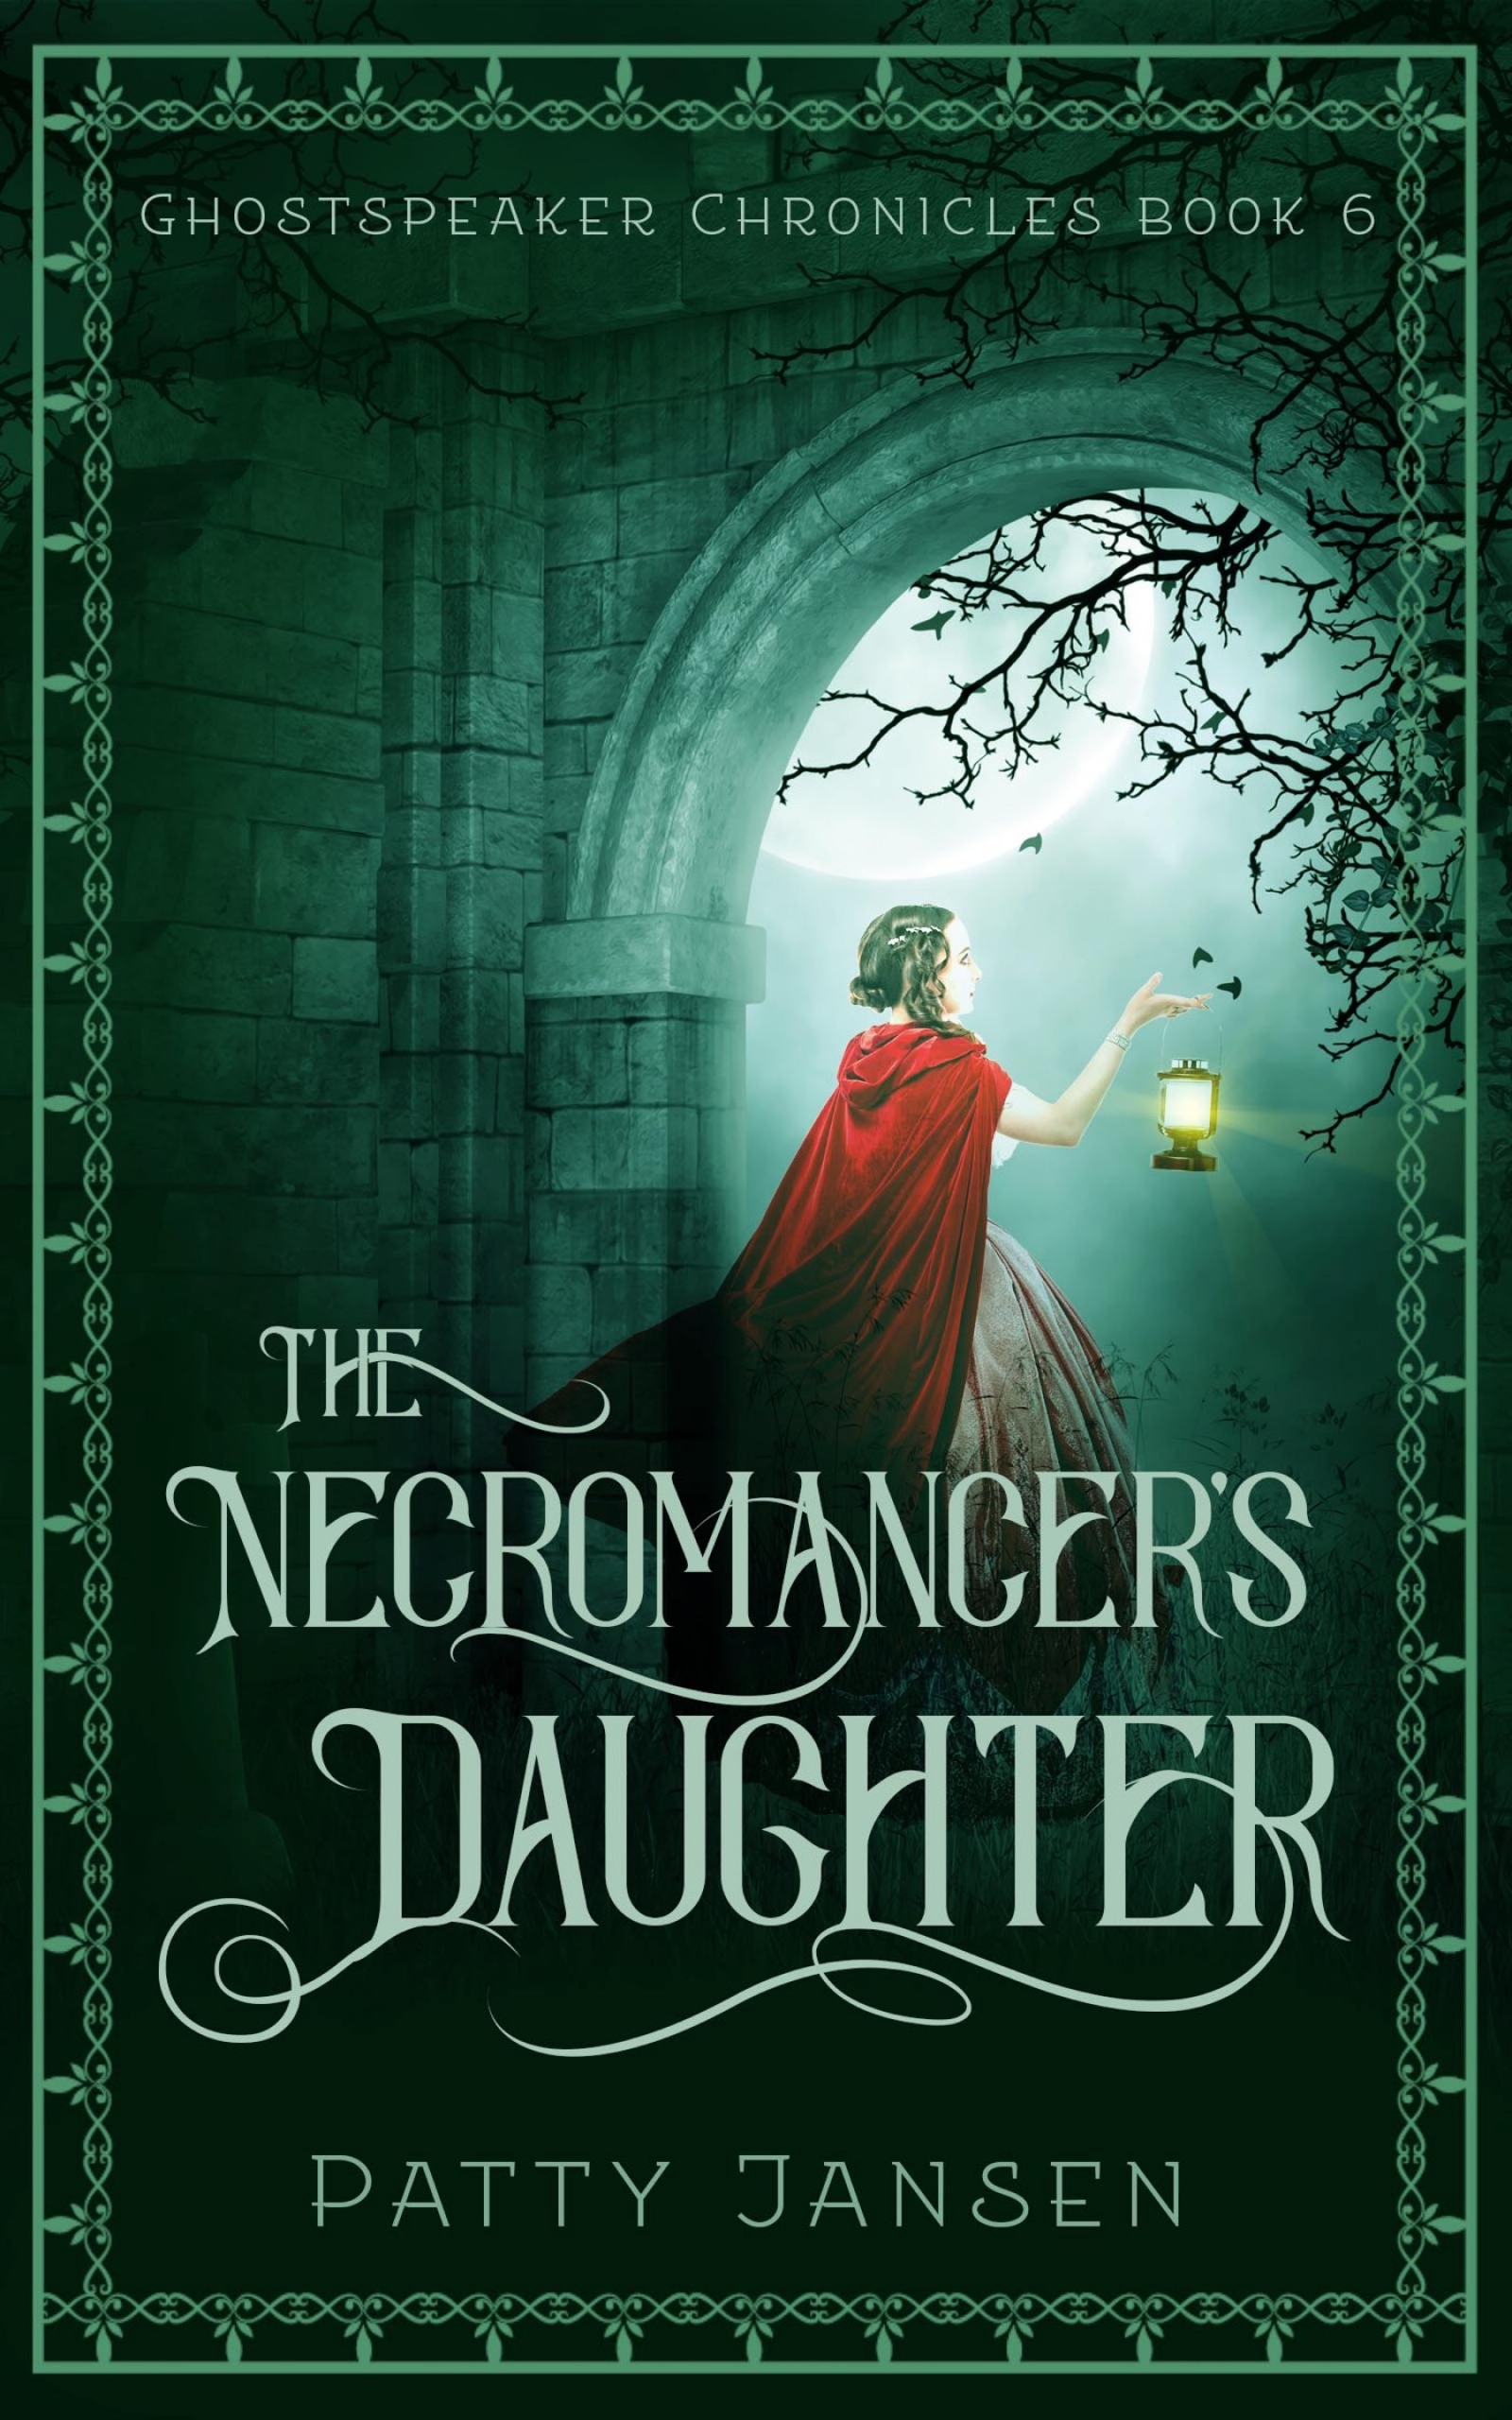 The Necromancer’s Daughter